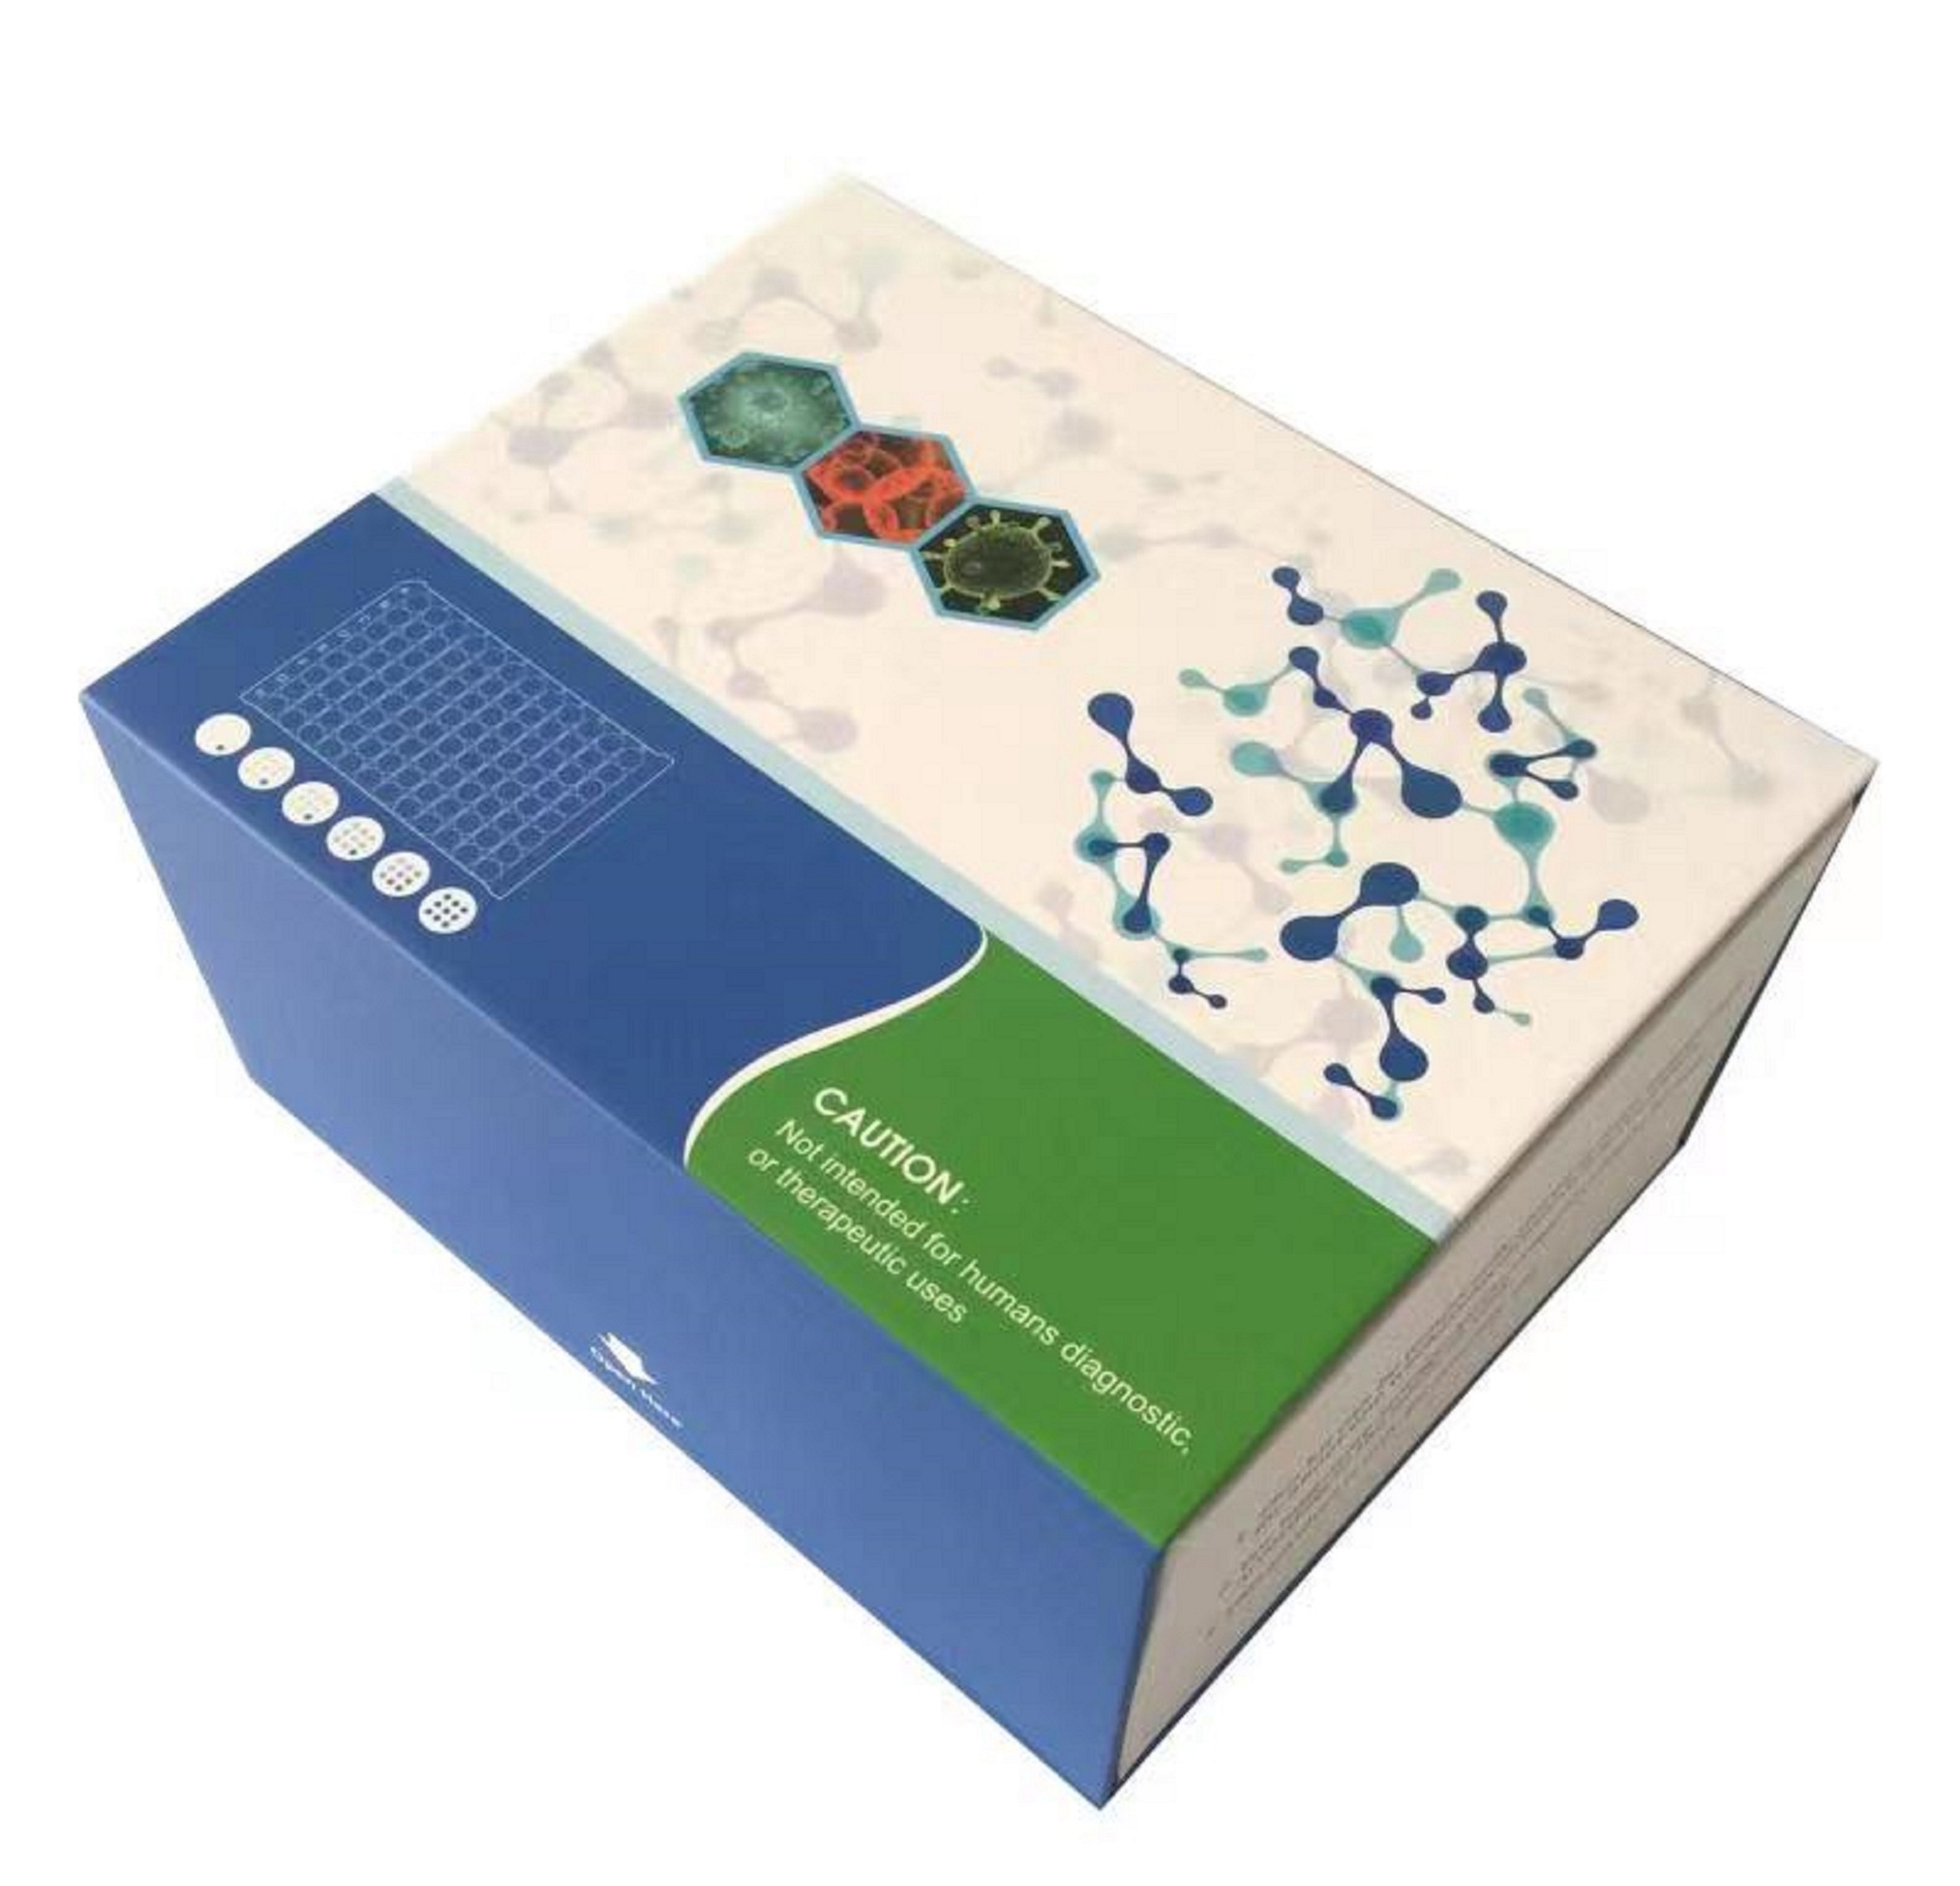 病毒DNA提取试剂盒